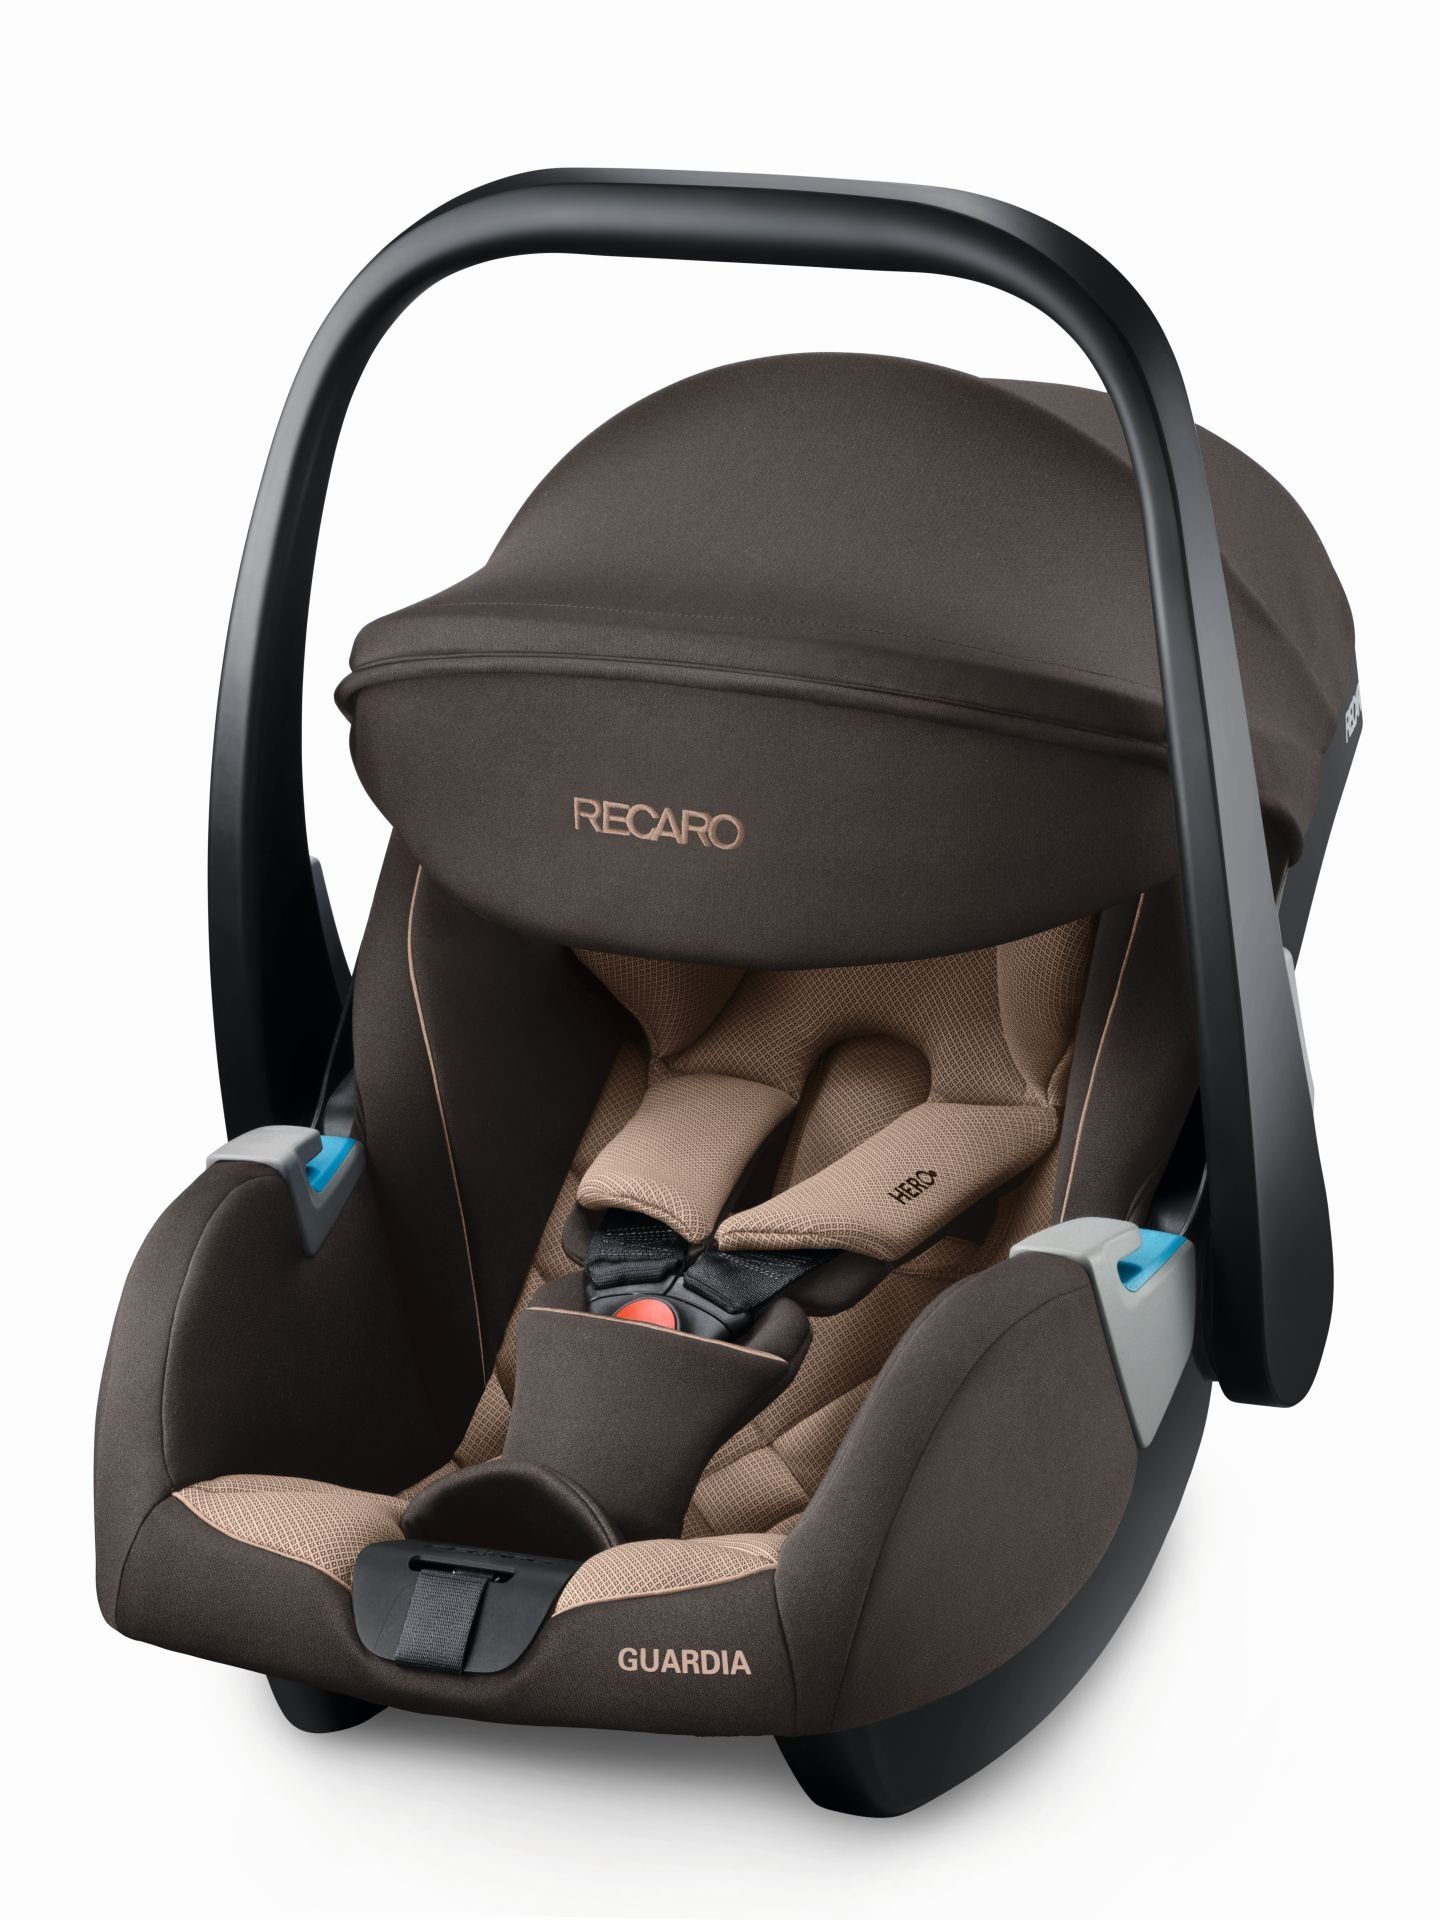 RECARO Autokindersitz Recaro Guardia Babyschale/Kindersitz rot